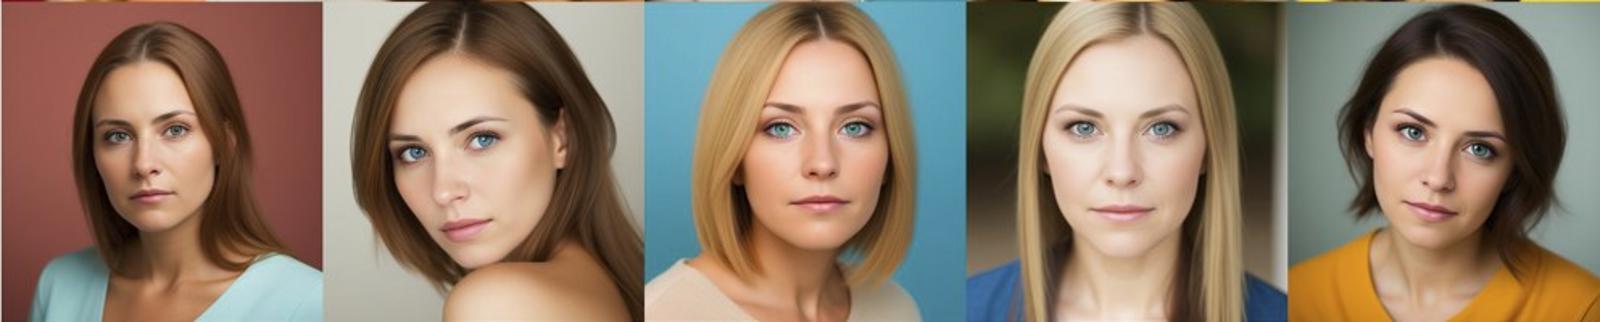 Models producing similar looking faces